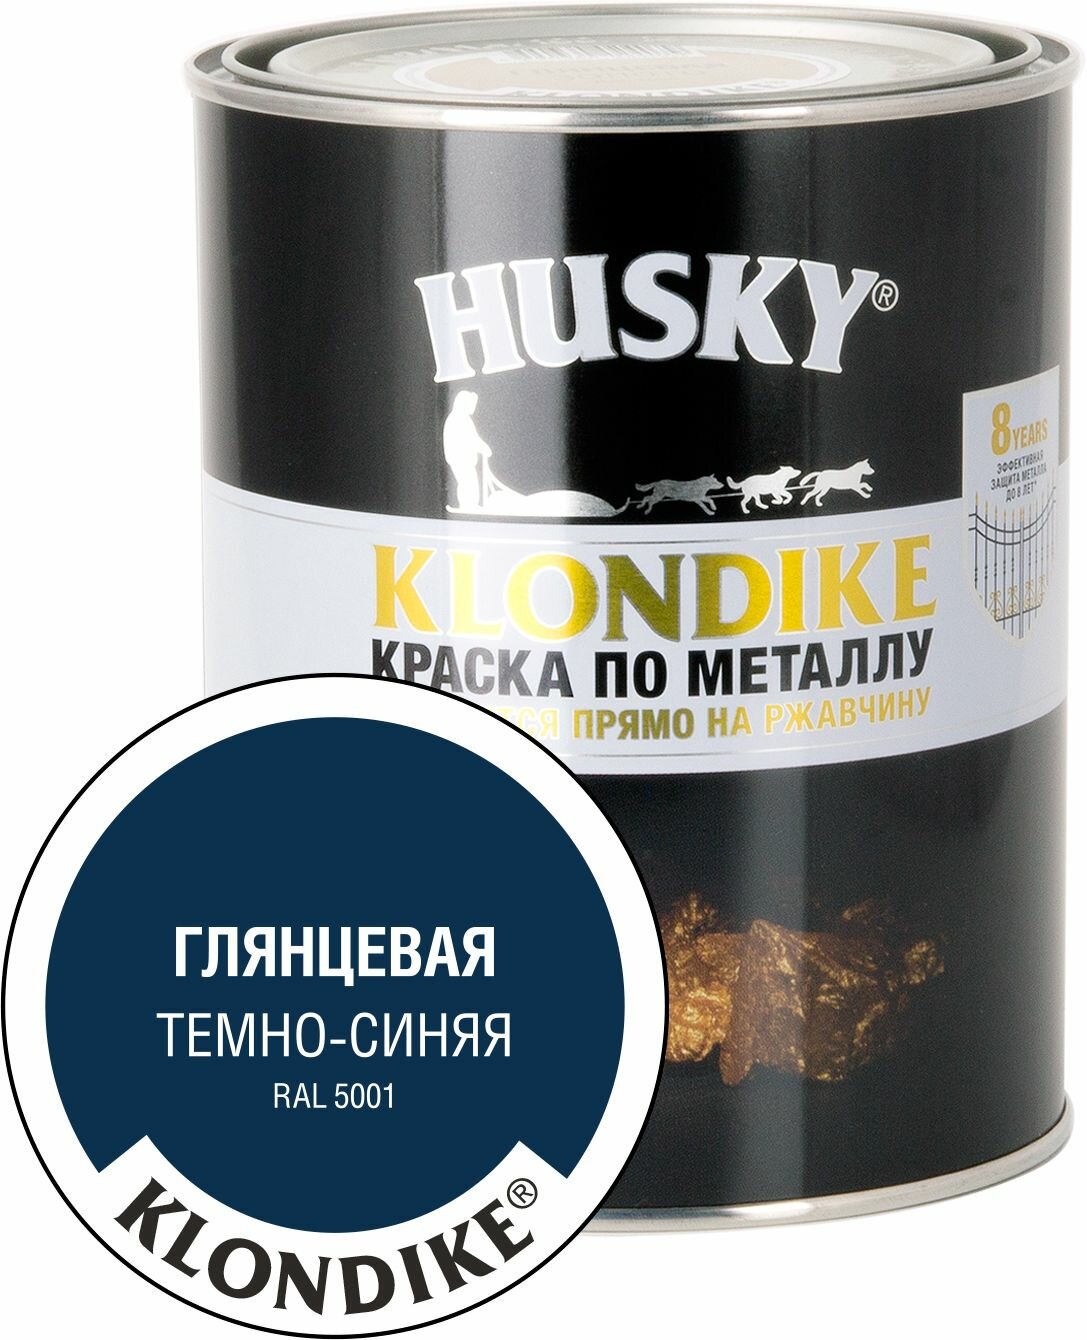 Краска по металлу HUSKY KLONDIKE (Темно-синяя RAL 5001) 0,9 л